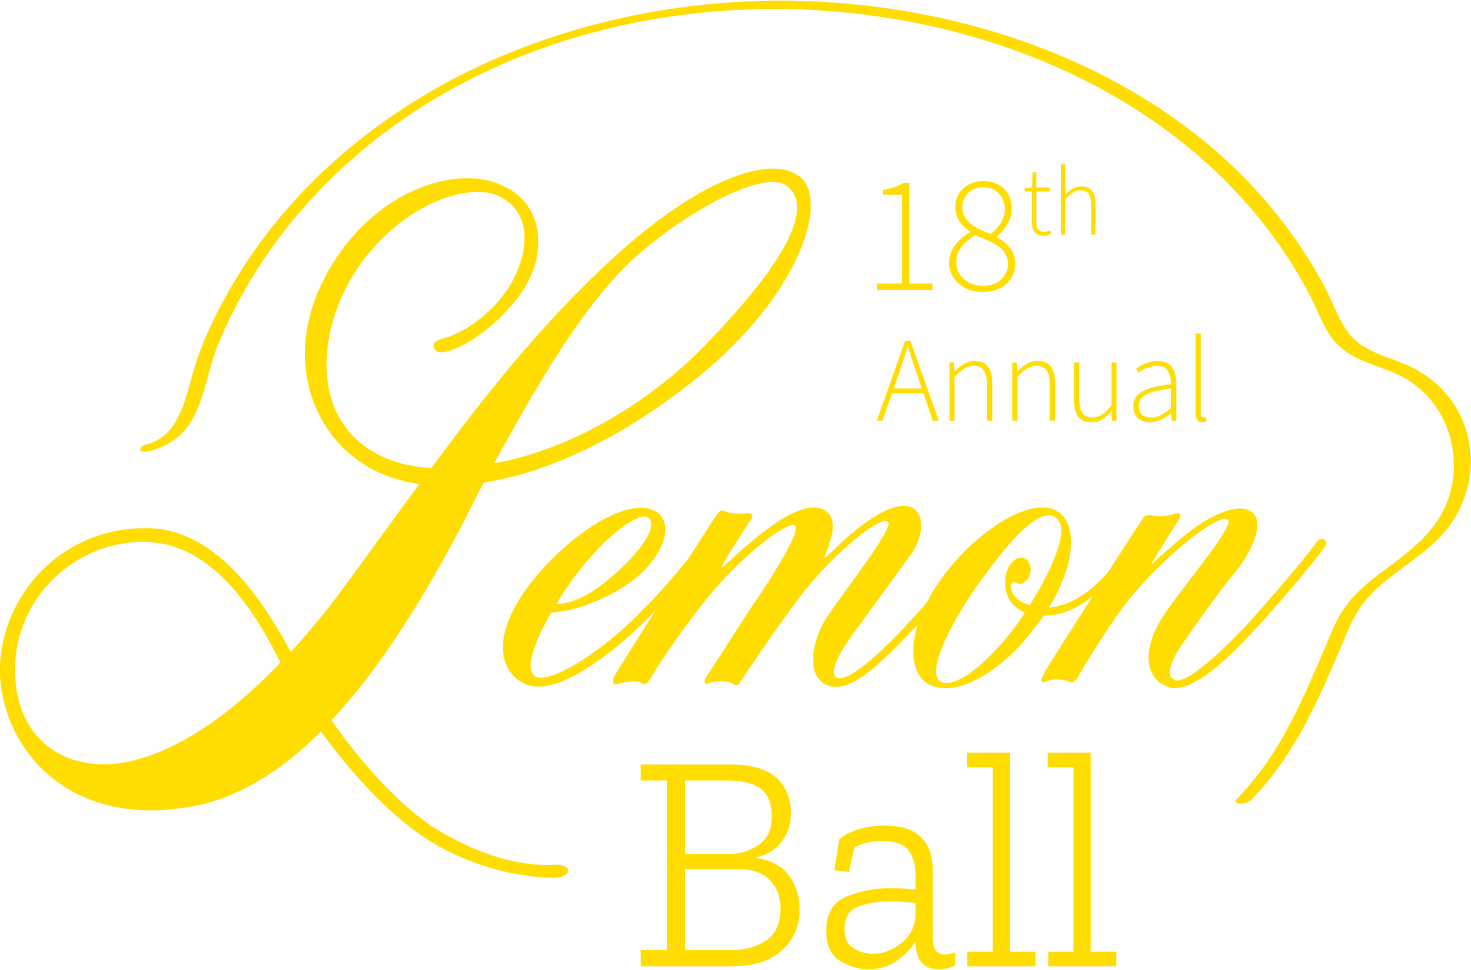 The Lemon Ball